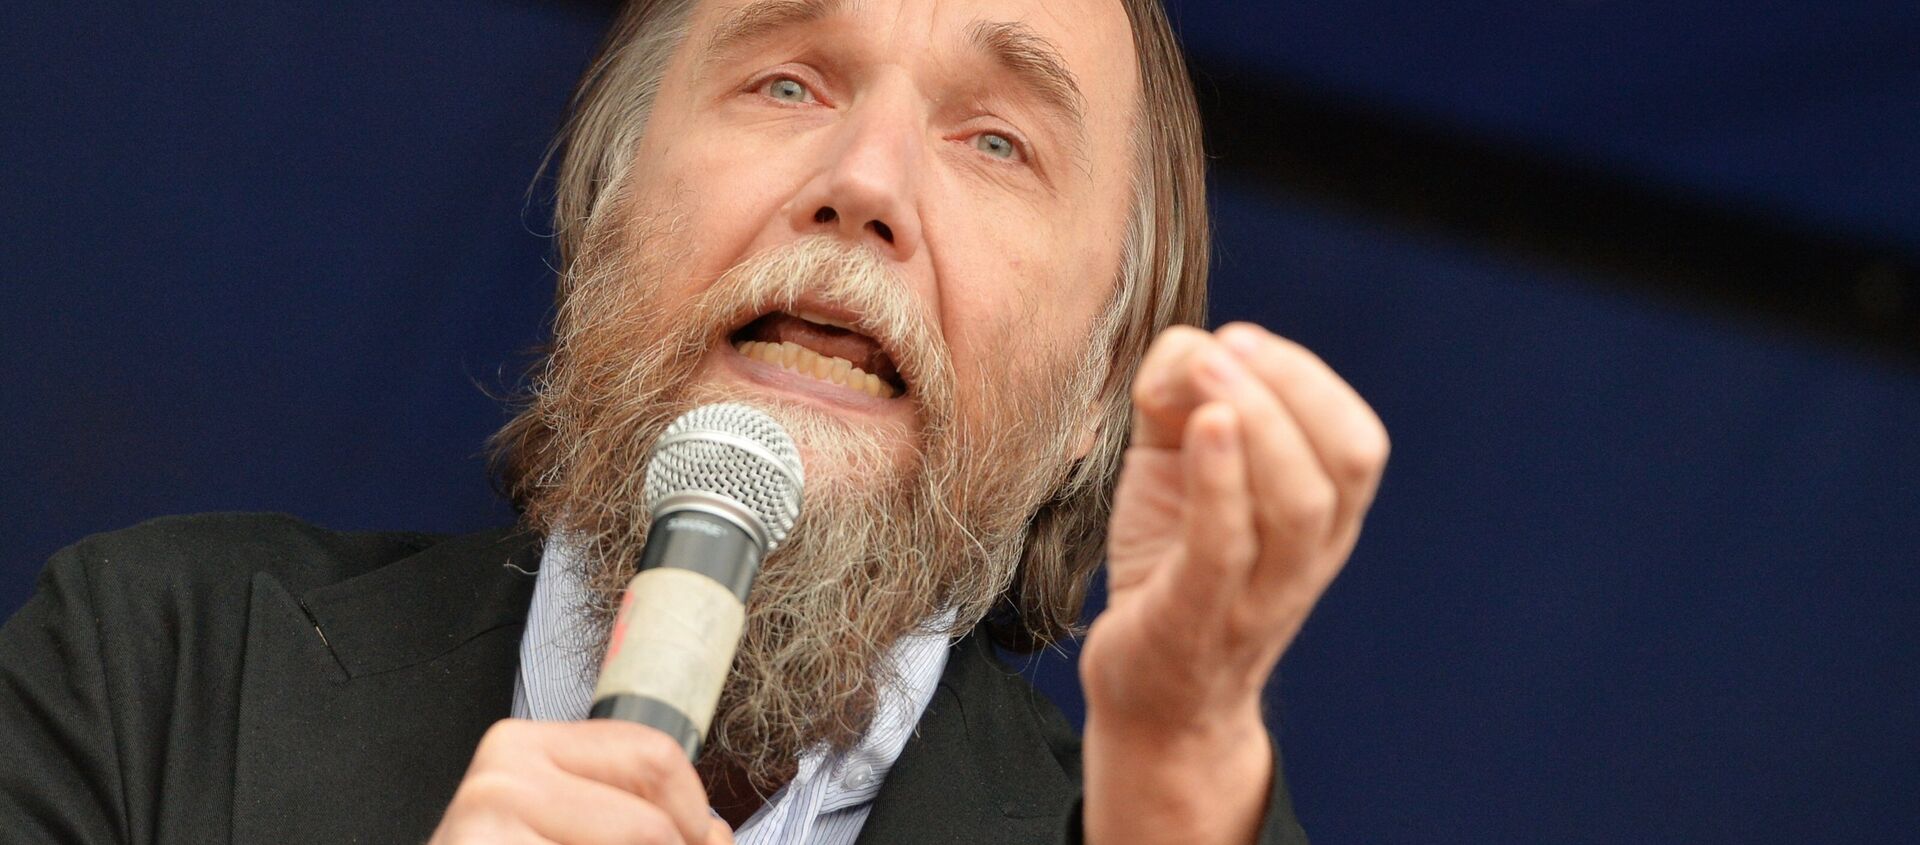 Alexander Dugin - Sputnik International, 1920, 05.09.2015